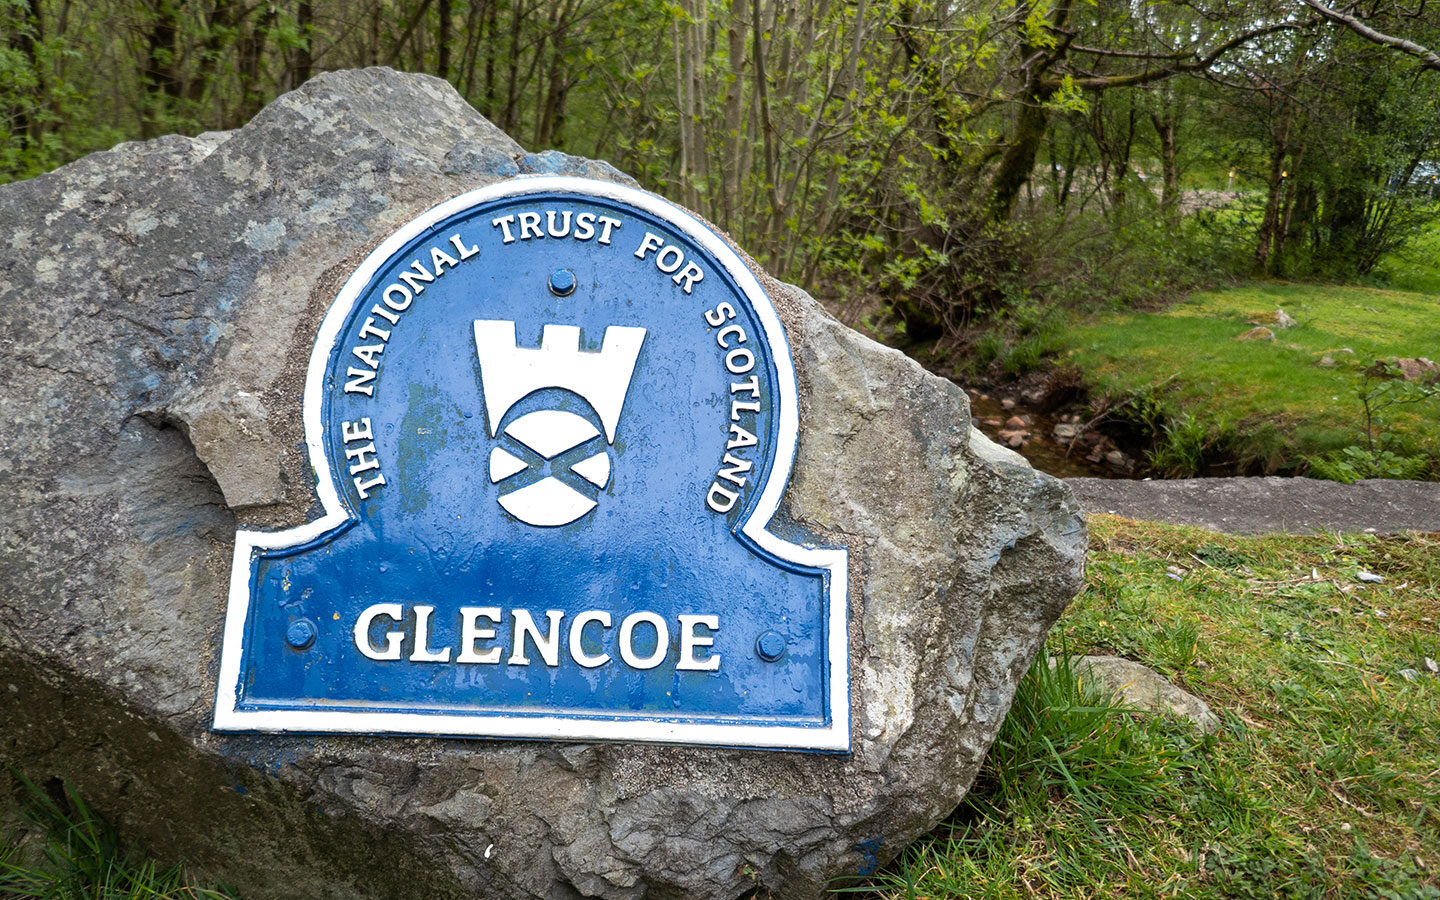 Glencoe Visitor Centre in the Scottish Highlands